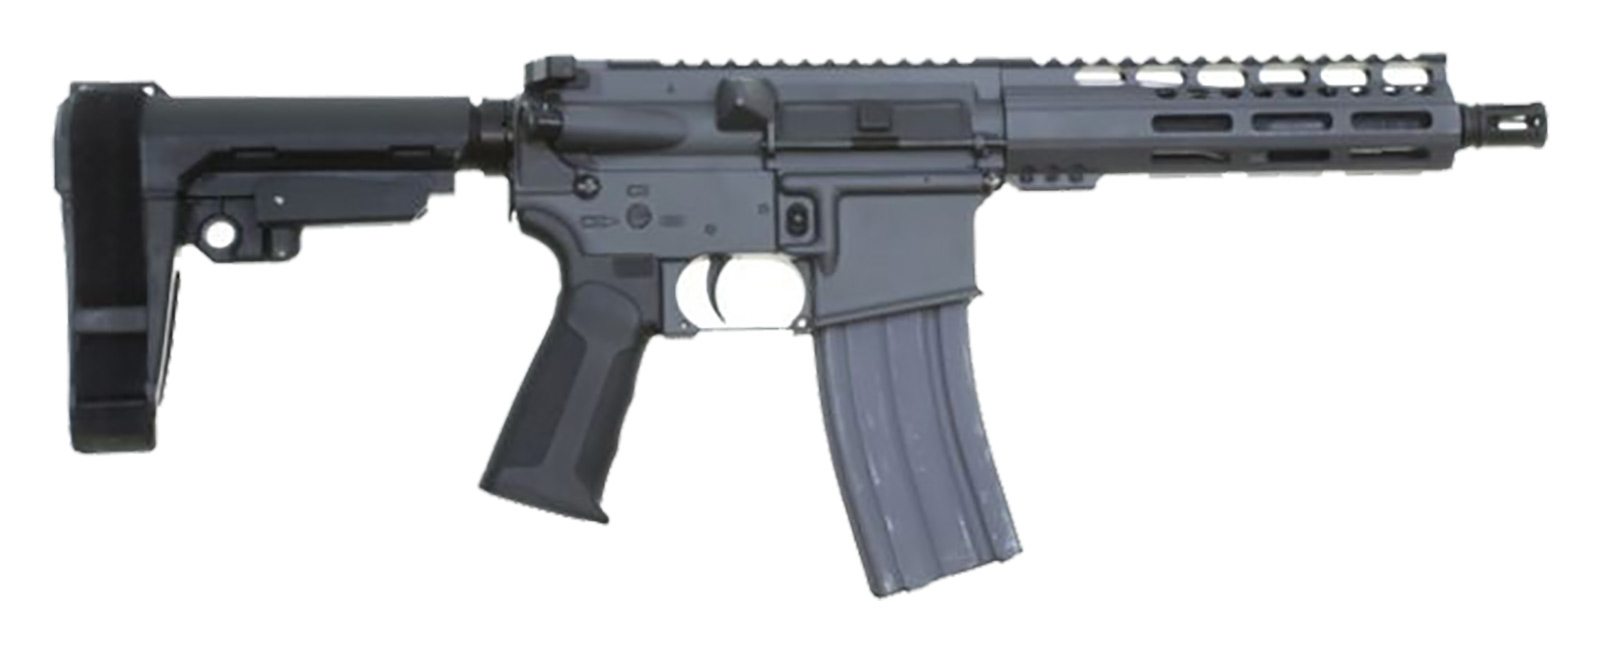 cbc-ps2-forged-aluminum-ar-pistol-sniper-grey-5-56-nato-7-5-barrel-7-m-lok-rail-sb3-brace